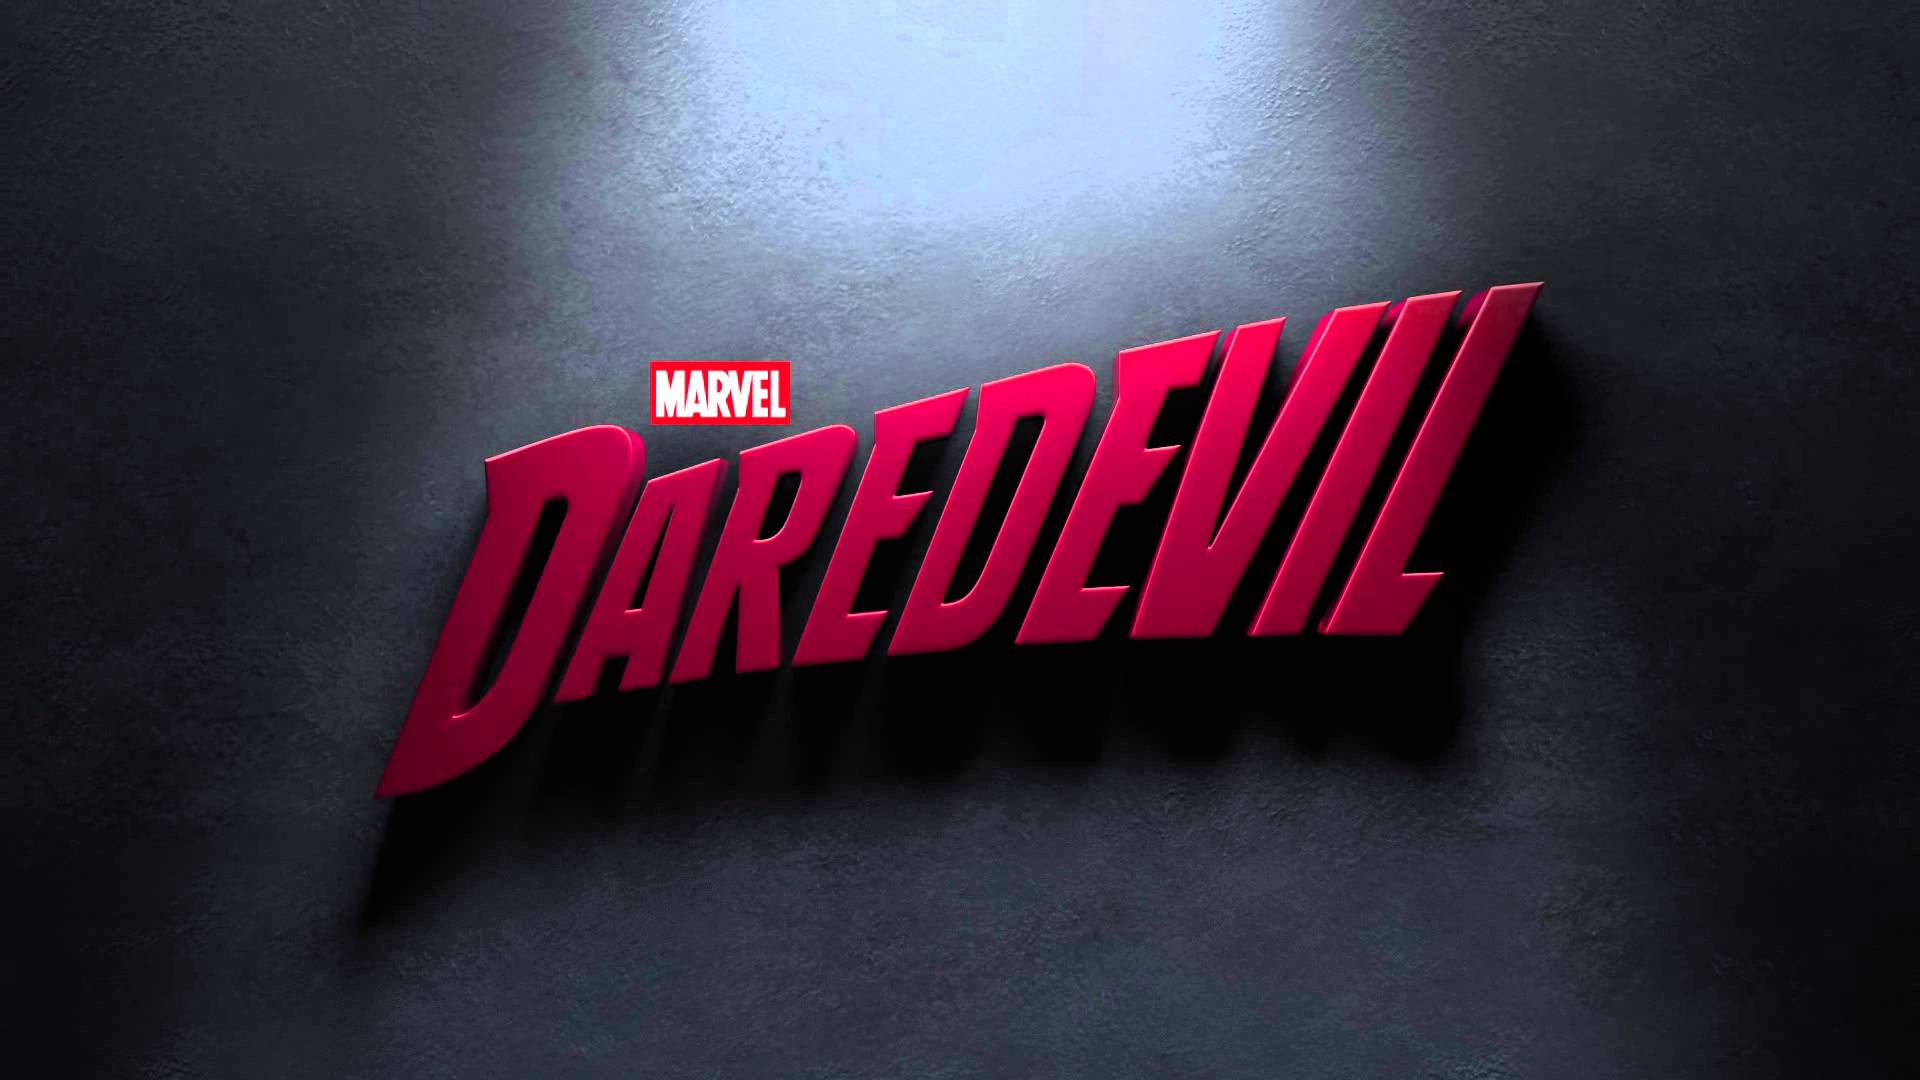 Daredevil HD wallpapers, Desktop wallpaper - most viewed